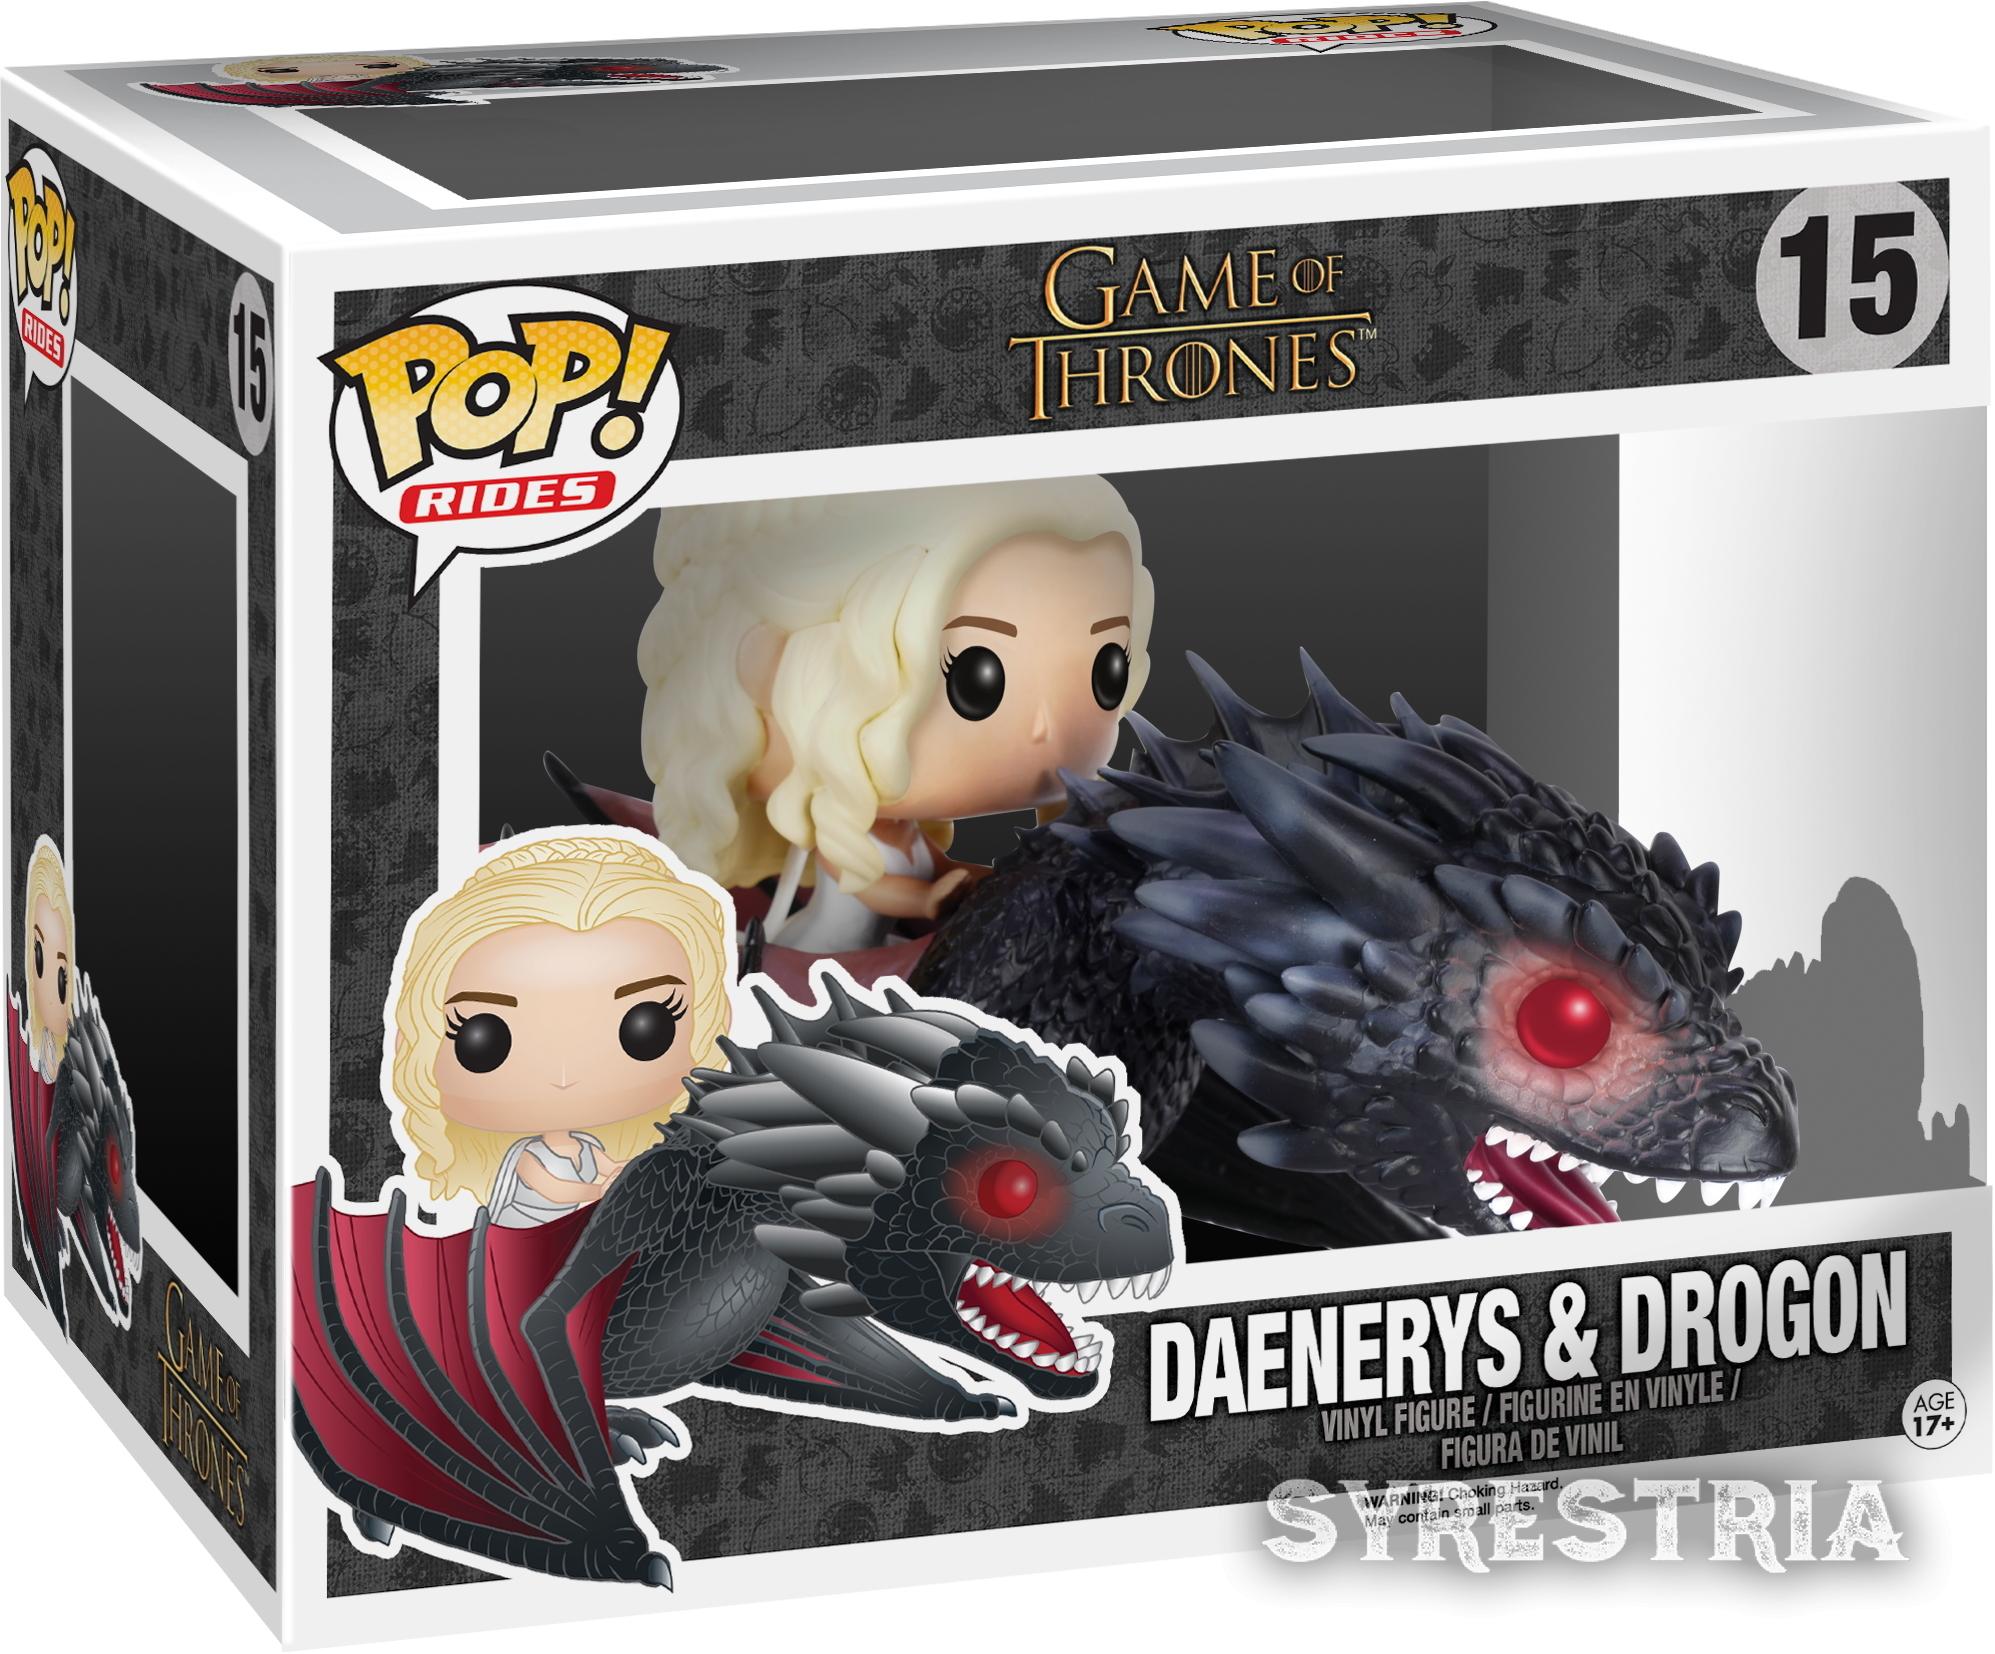 Game of Thrones - Daenerys & Drogon 15 - Funko Pop! - Vinyl Figur